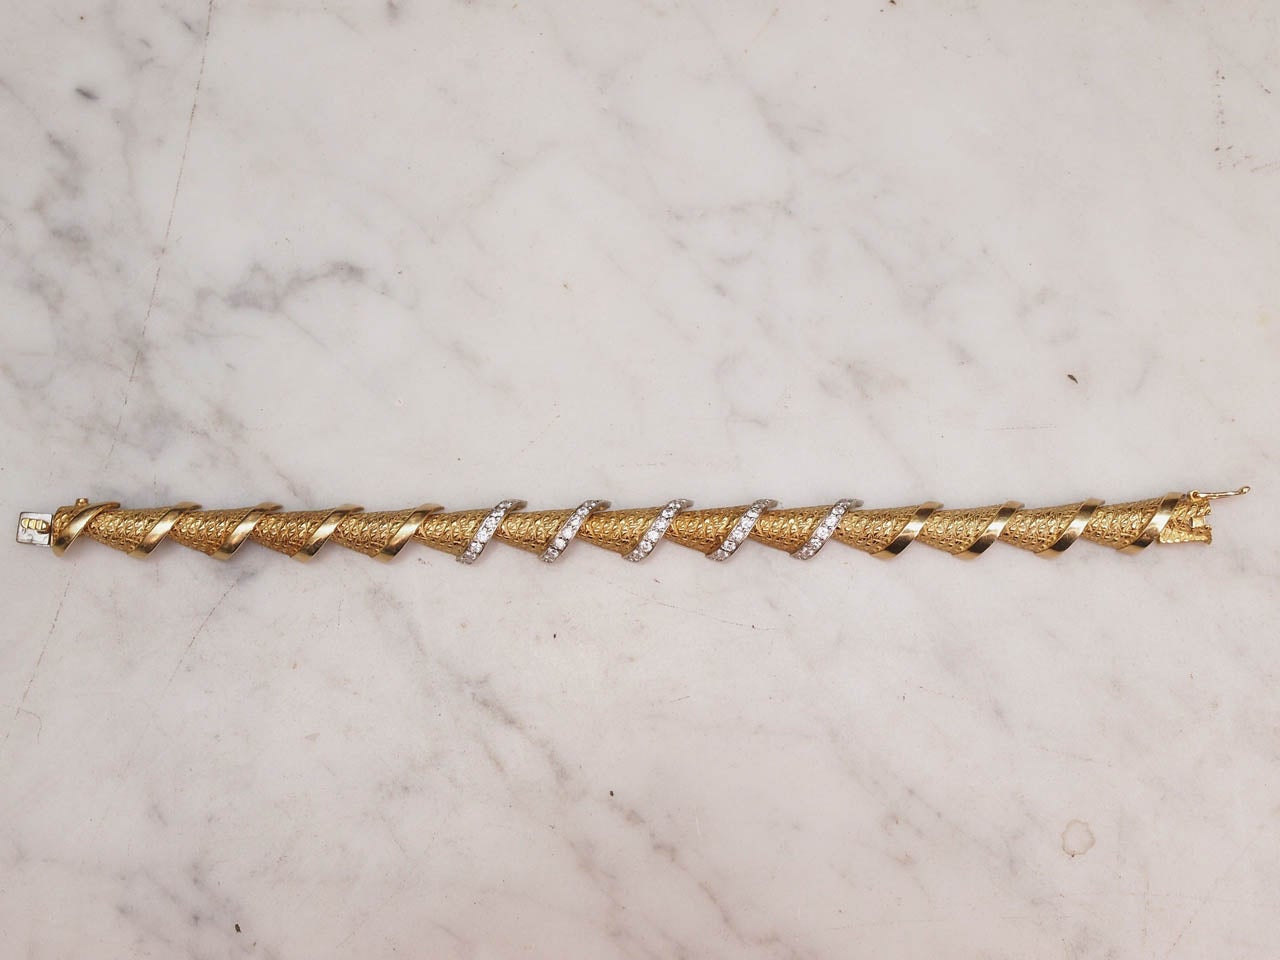 Classic 1940s Vintage Diamond Bracelet.
40 round cut diamonds for 1.20 carats